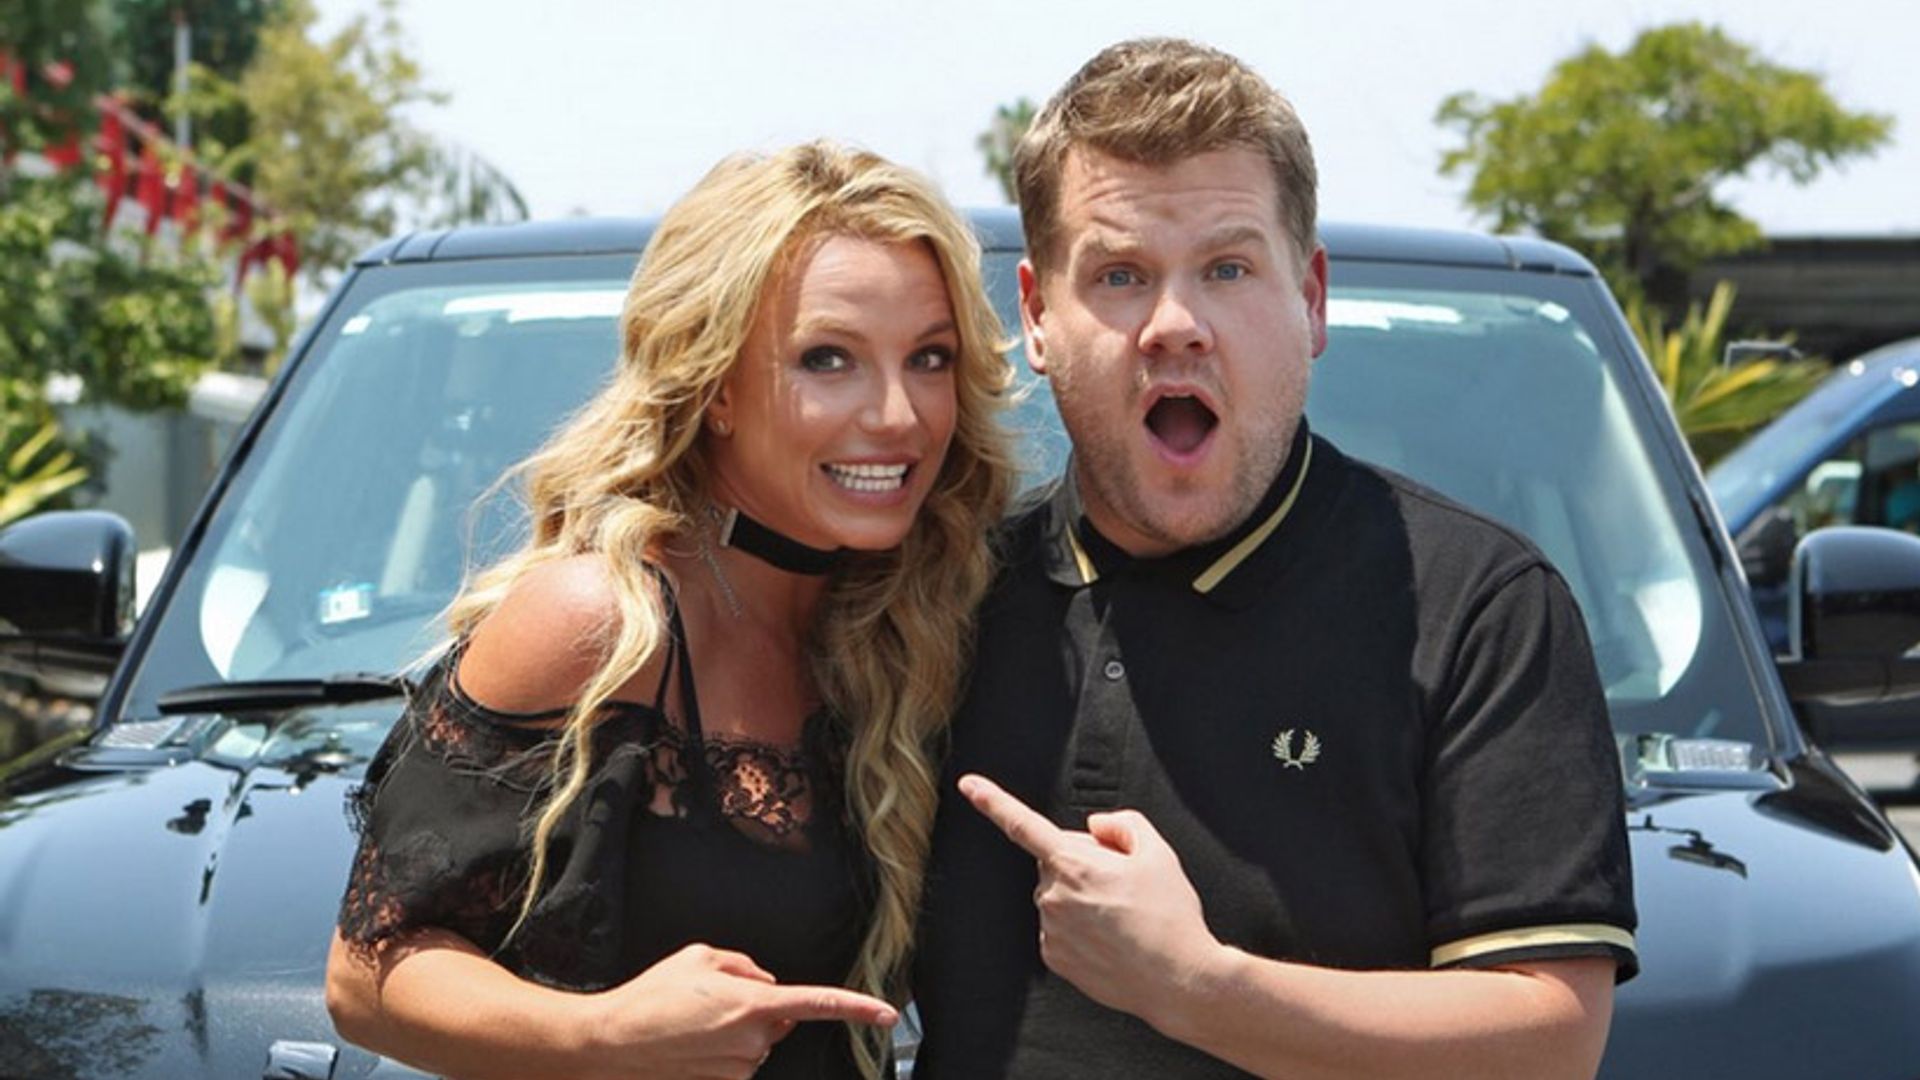 He's so lucky! James Corden takes Carpool Karaoke trip with Britney Spears